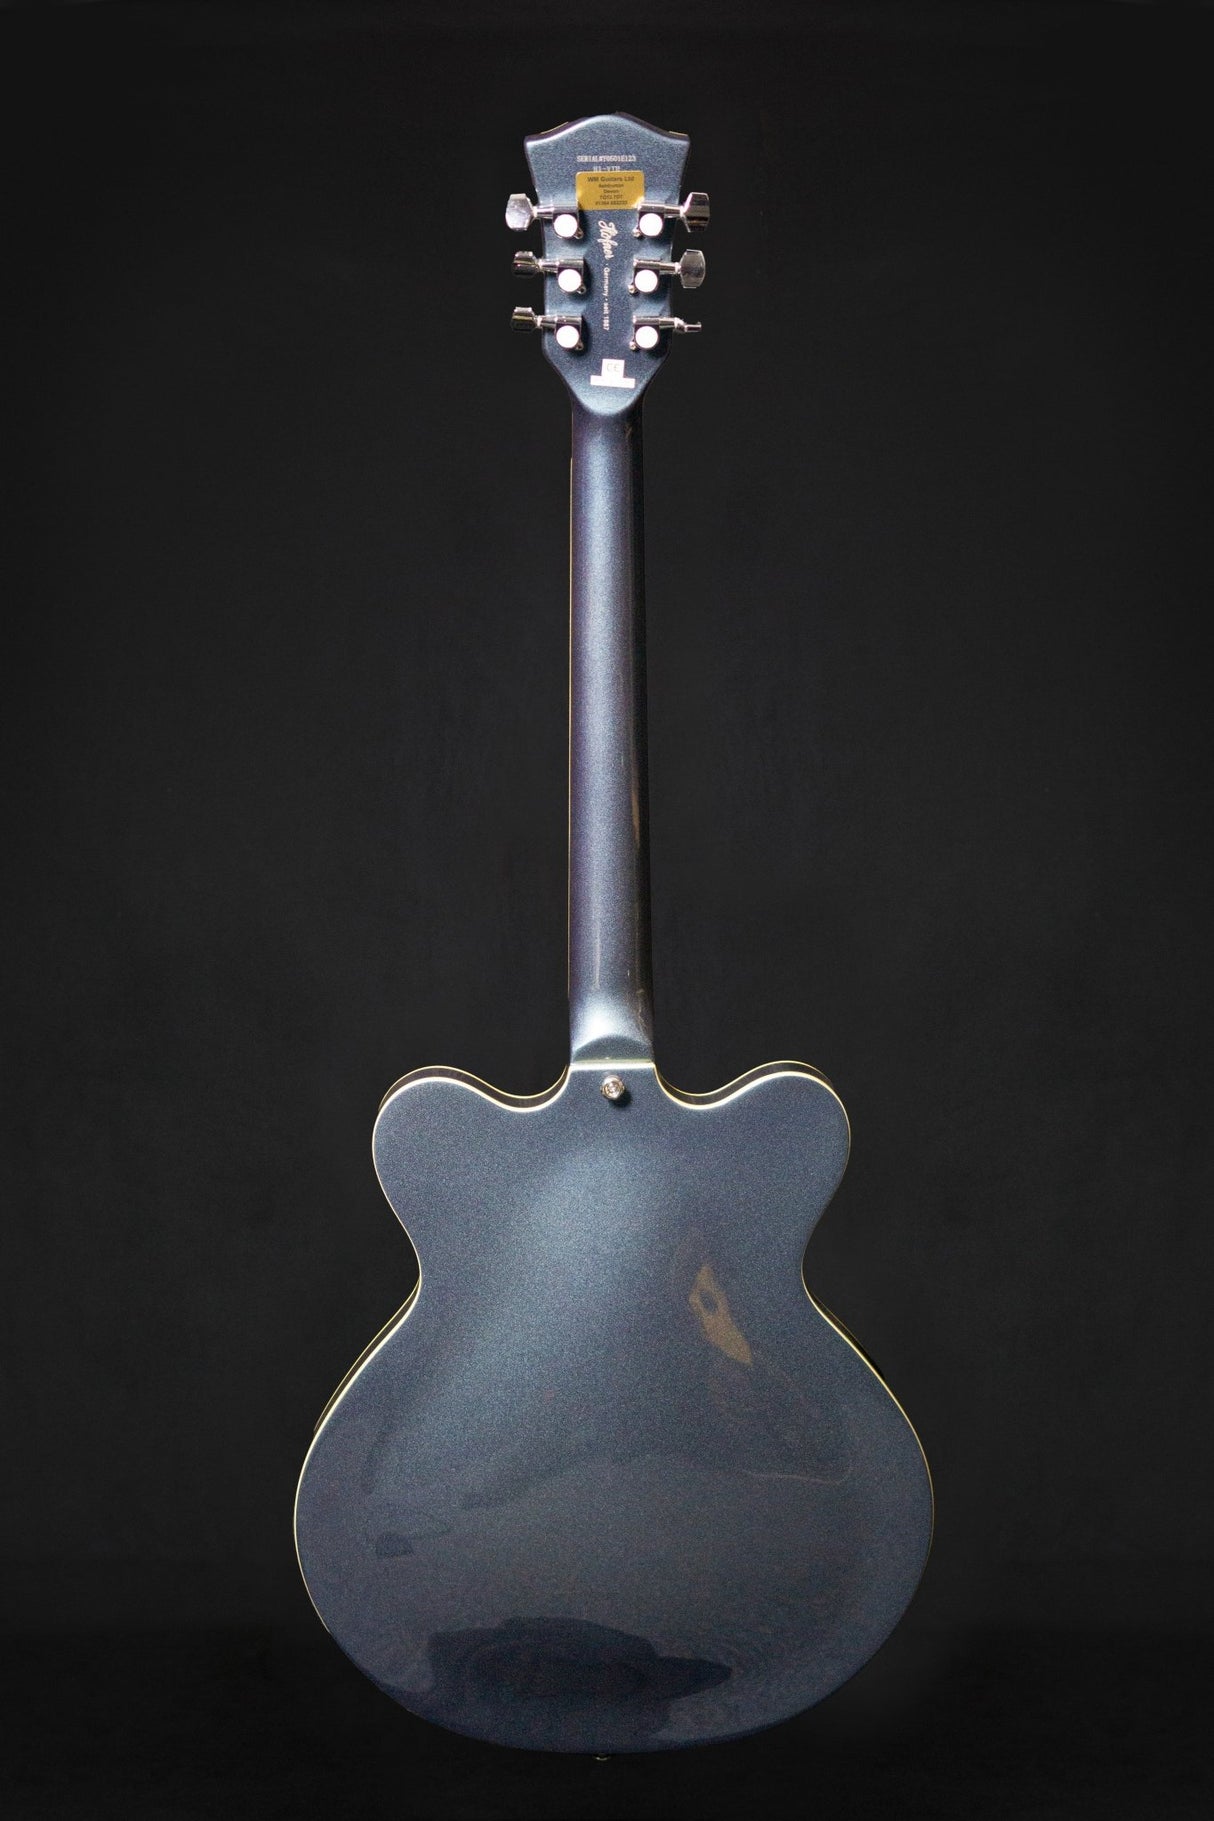 Höfner Verythin UK Exclusive Semi Acoustic Guitar (Pearl Blue) - Semi-Hollow - Höfner